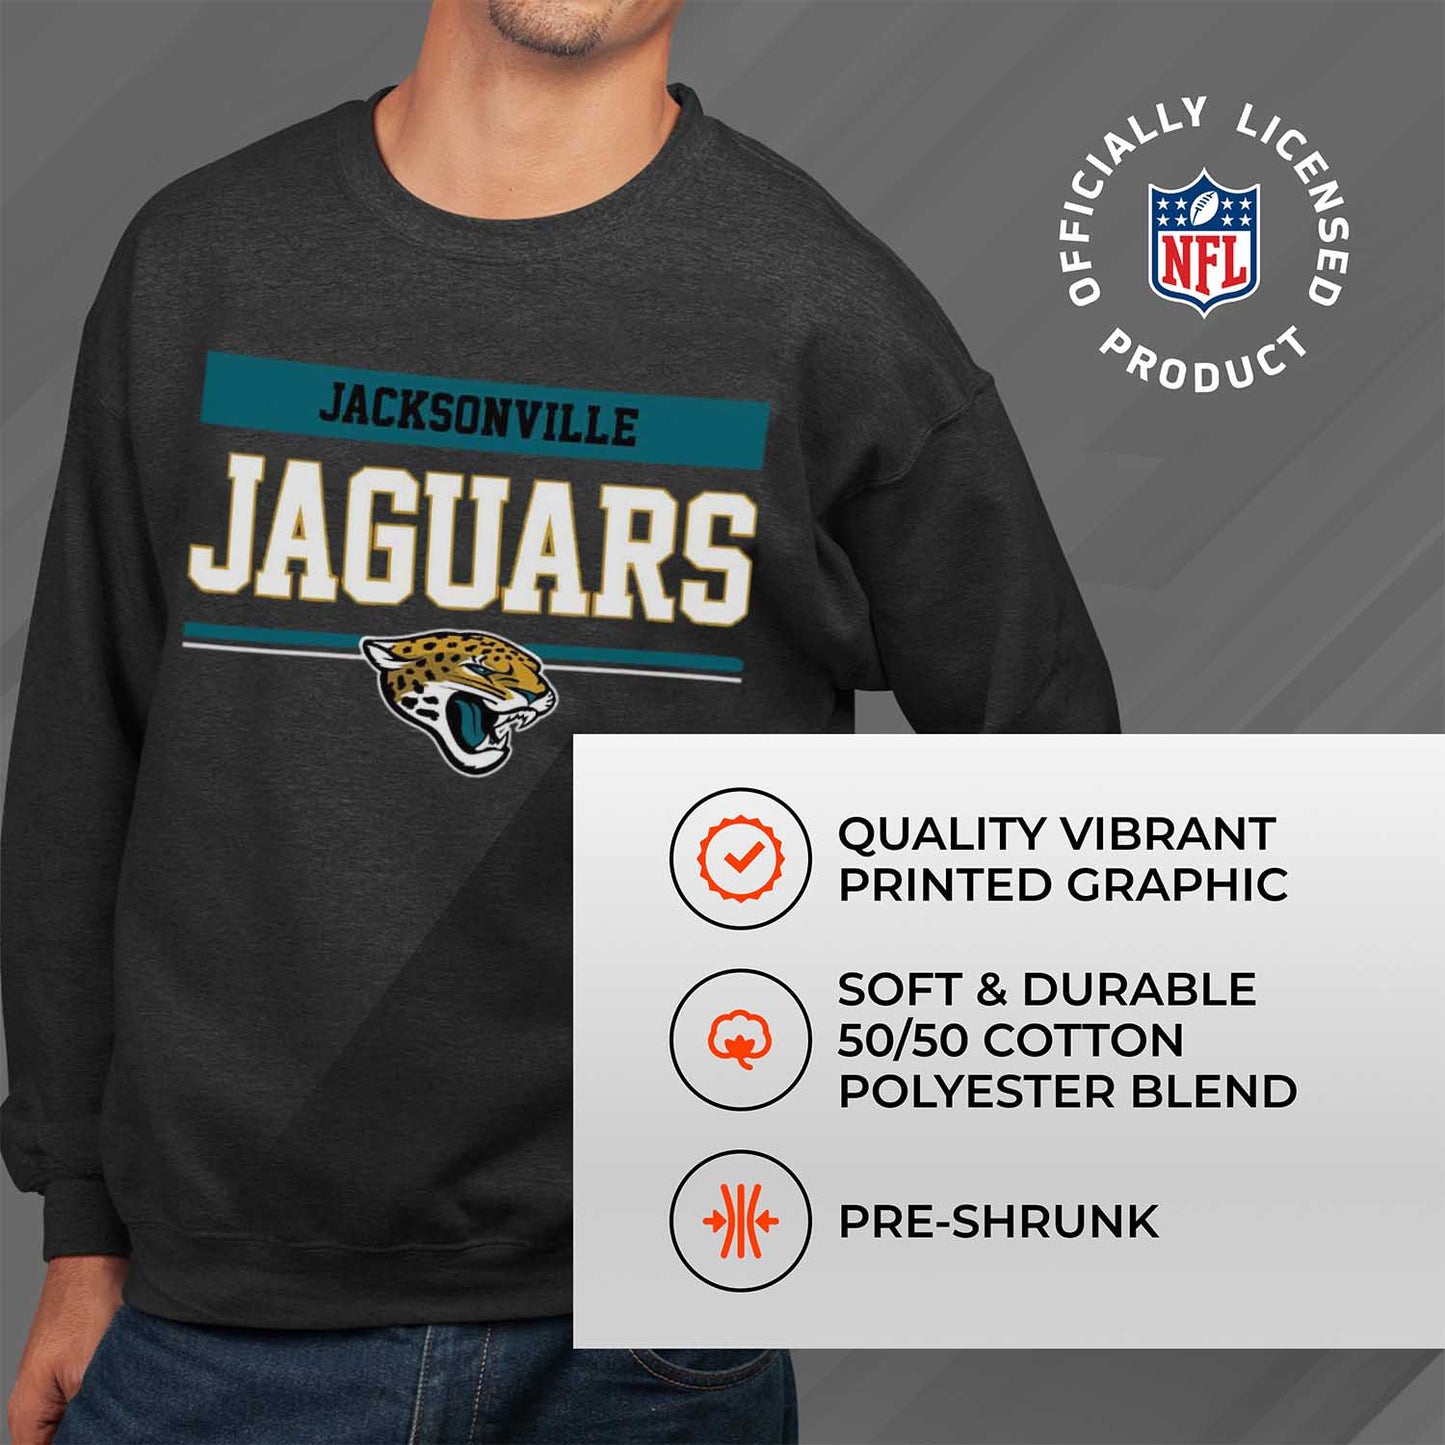 Jacksonville Jaguars NFL Adult Long Sleeve Team Block Charcoal Crewneck Sweatshirt - Charcoal